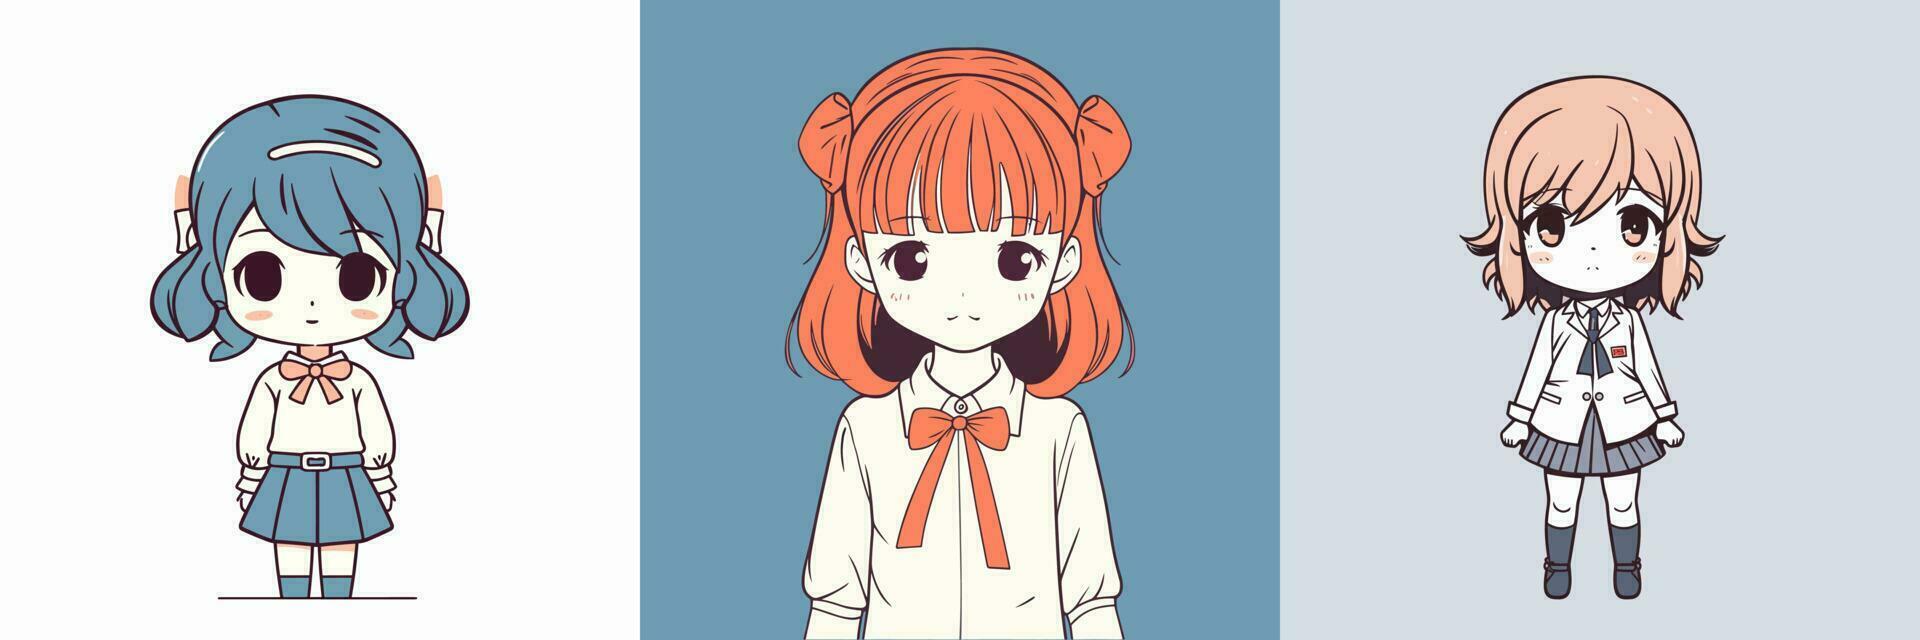 Cute kawaii girl chibi cartoon illustration vector